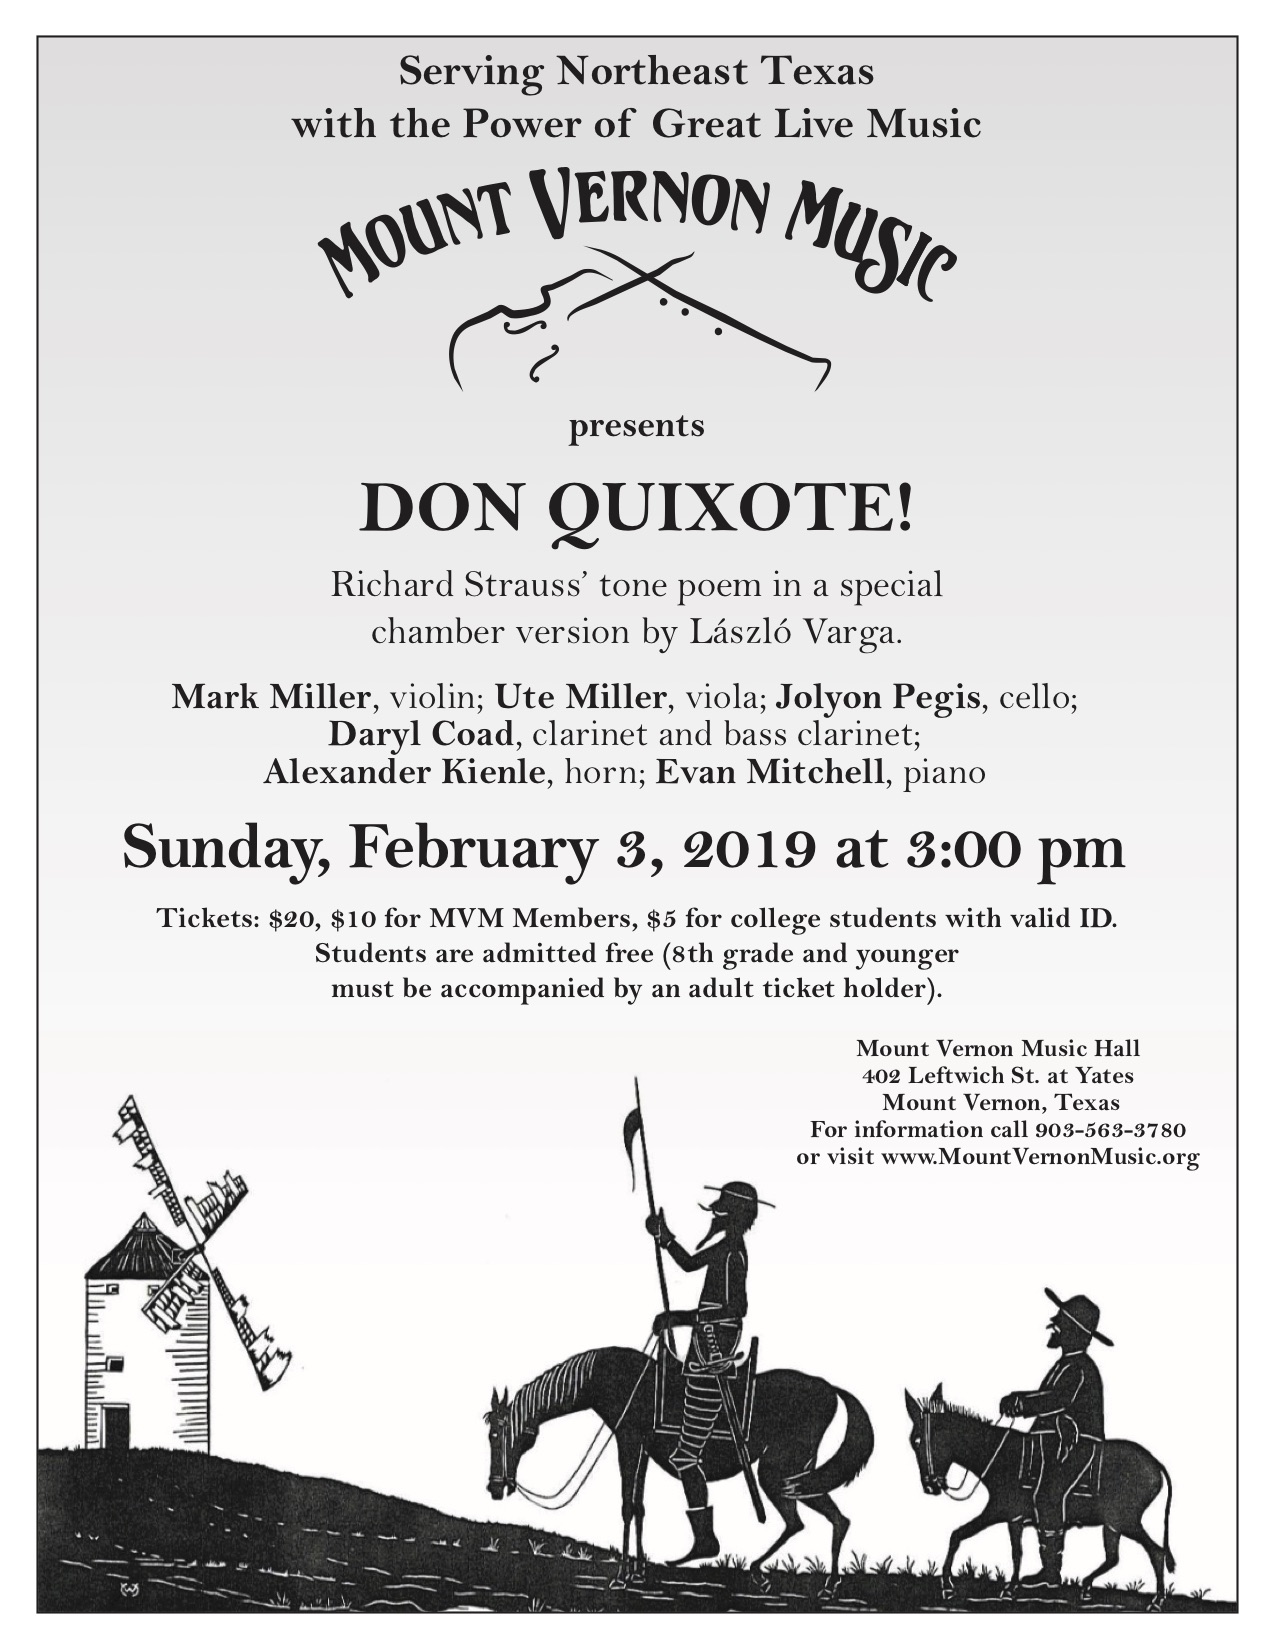 Mount Vernon Music Presents Don Quixote! on Sunday, February 3rd